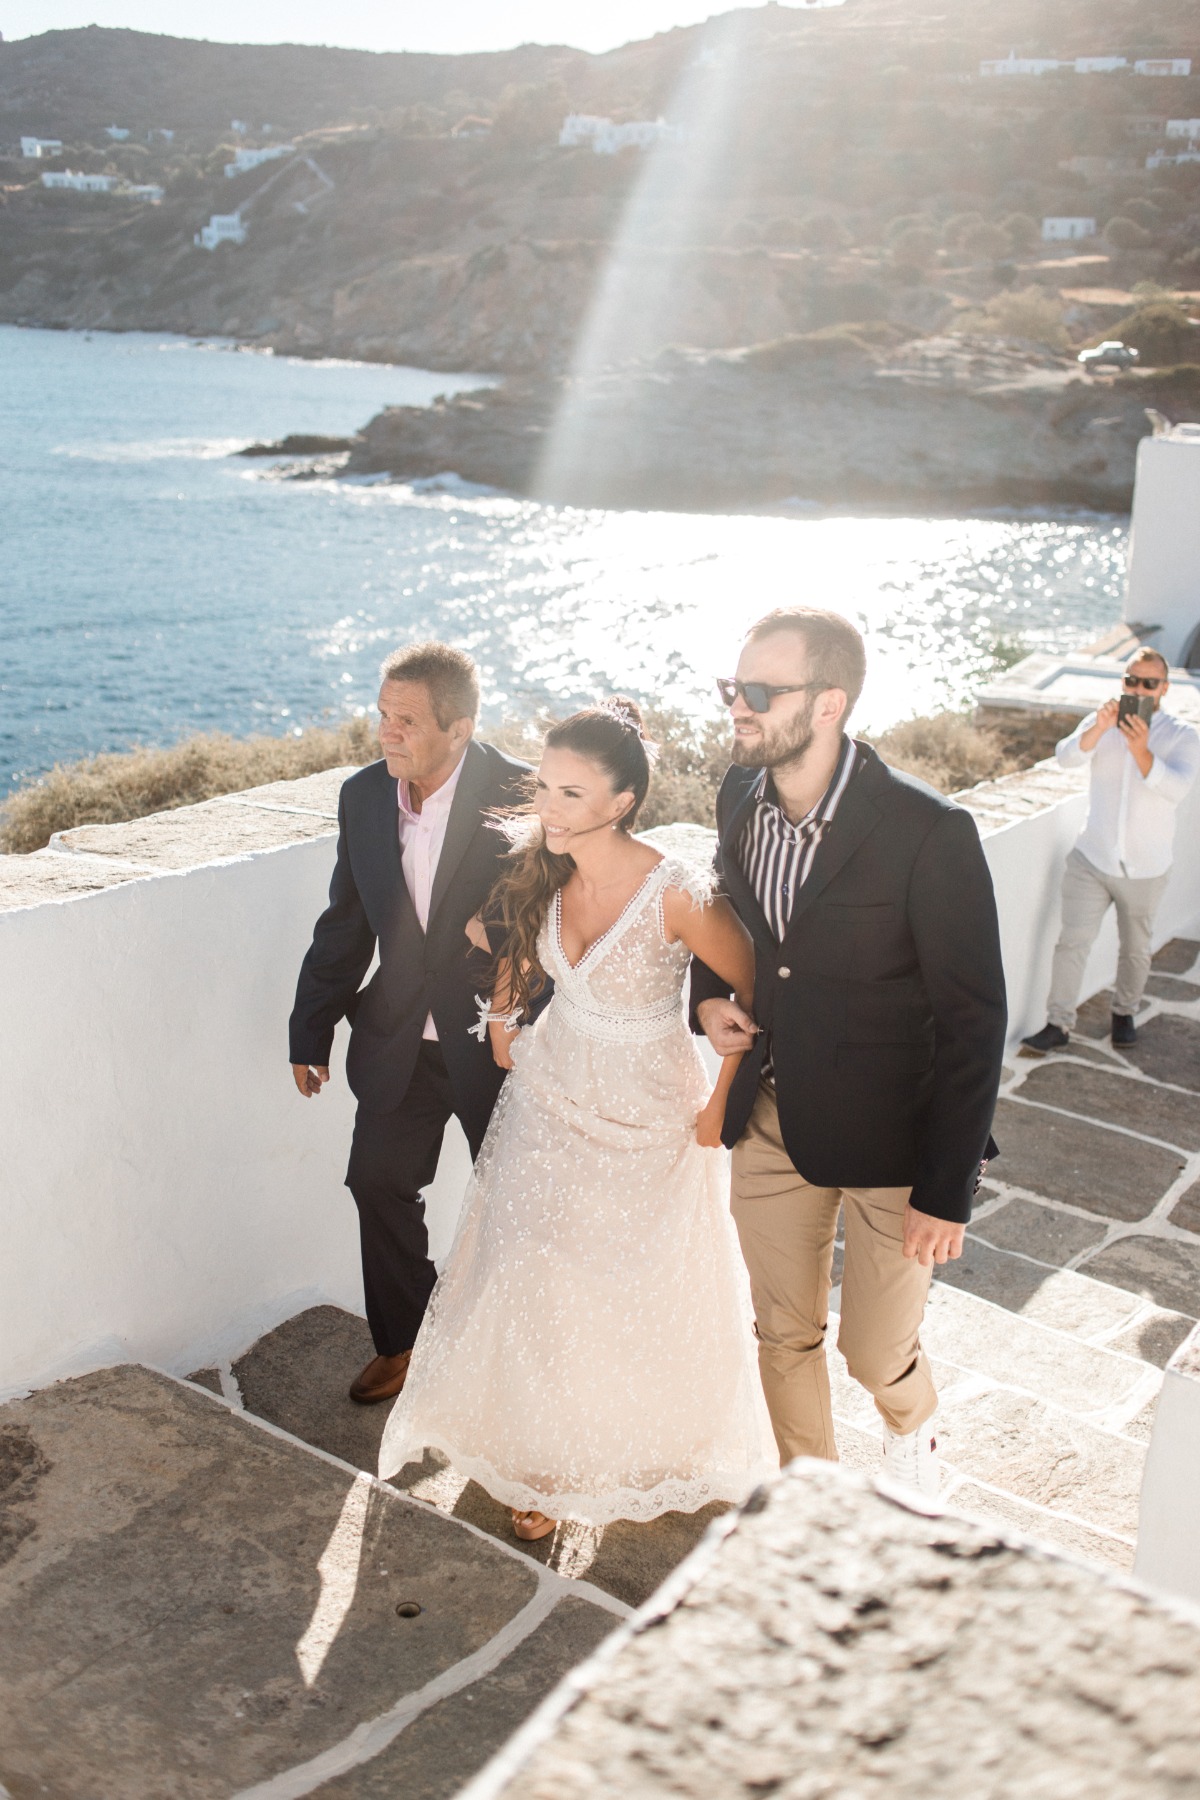 Three Days of Wedding Celebration in the island of Sifnos Island, Greece